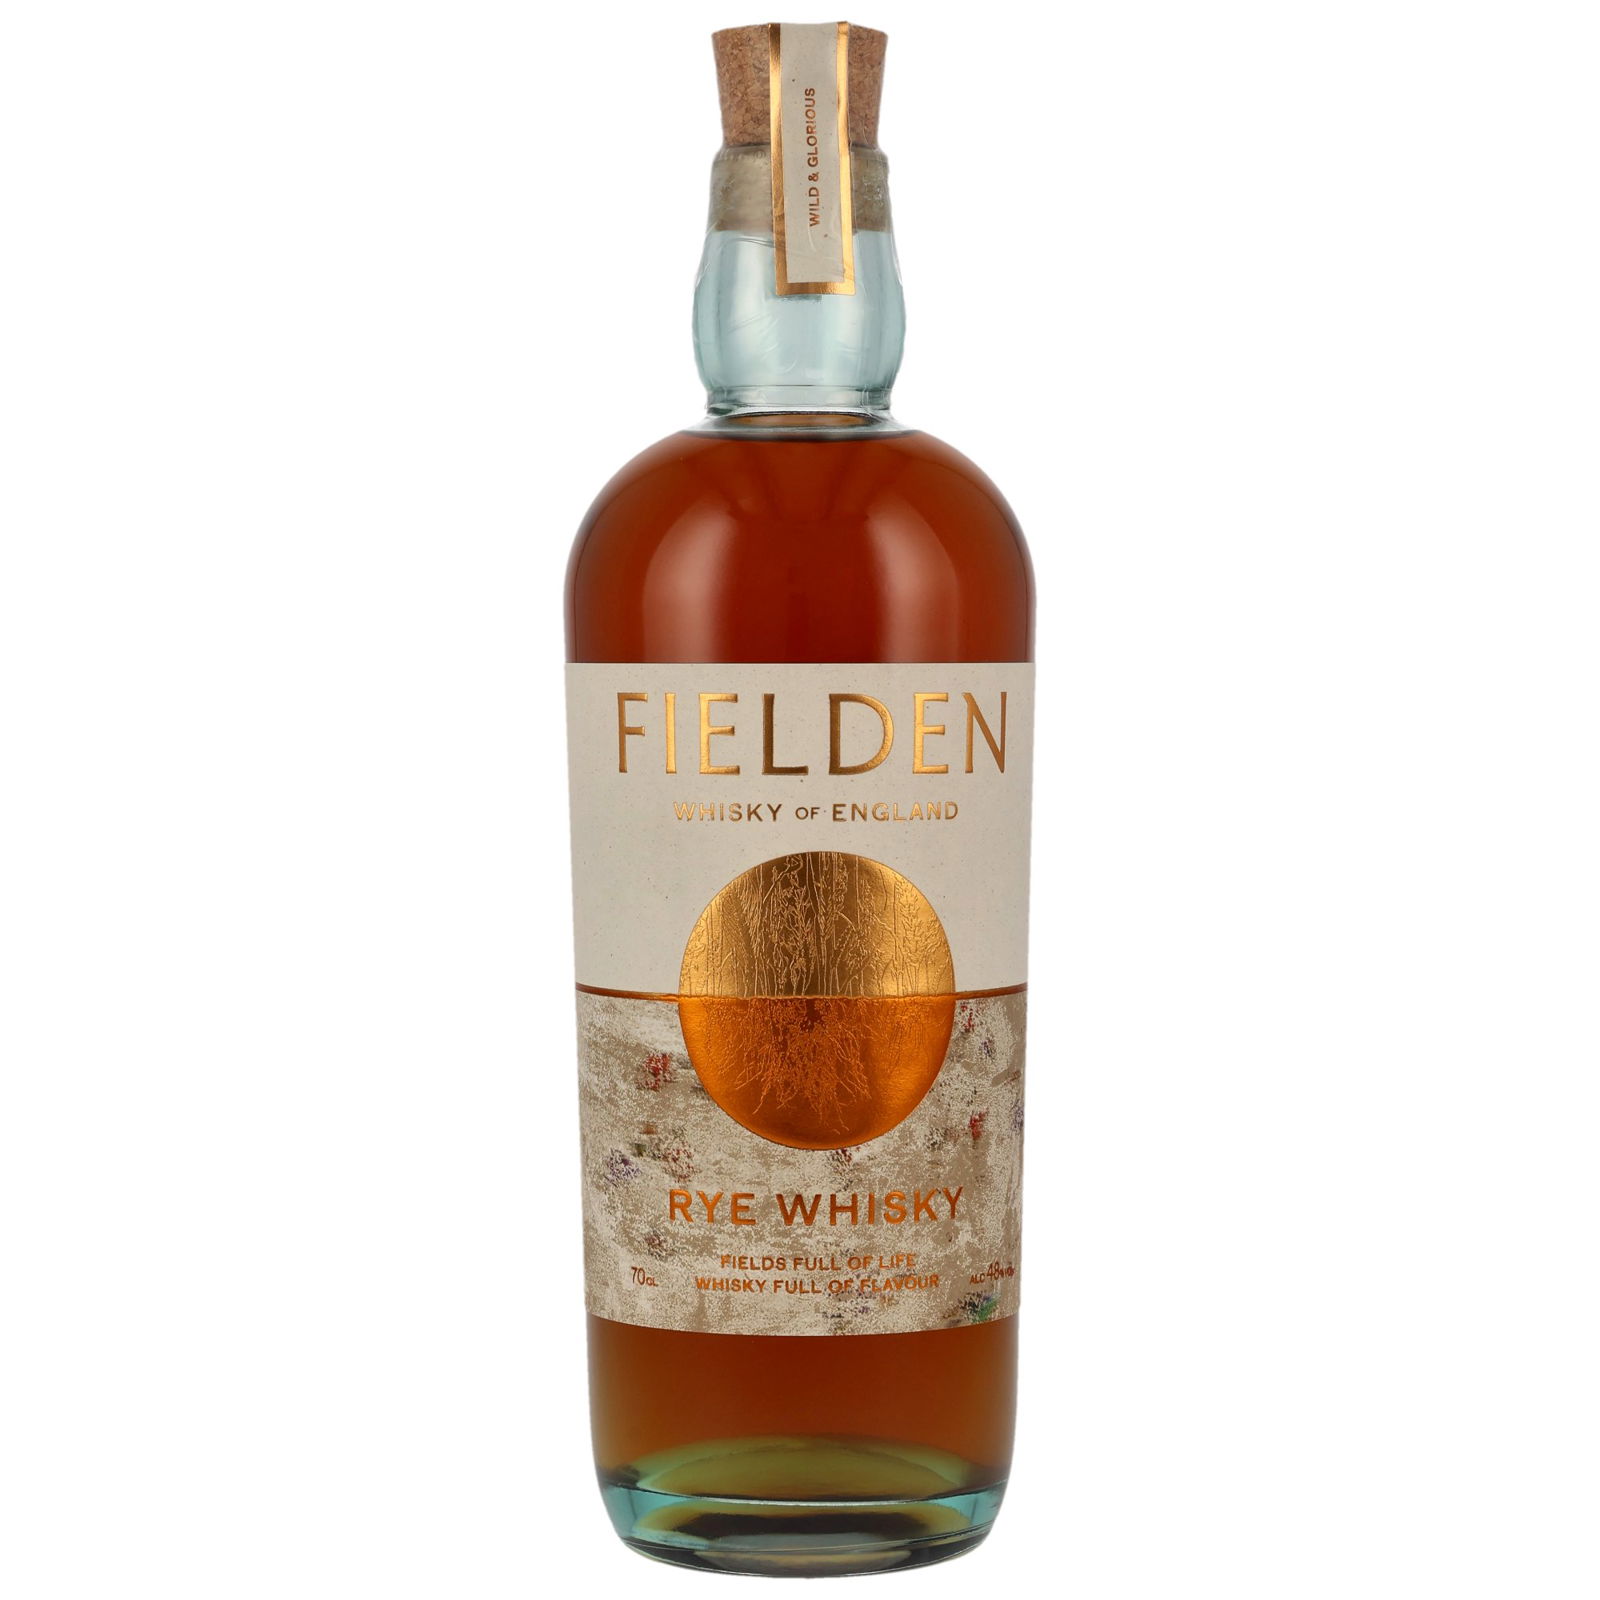 Fielden Rye Whisky